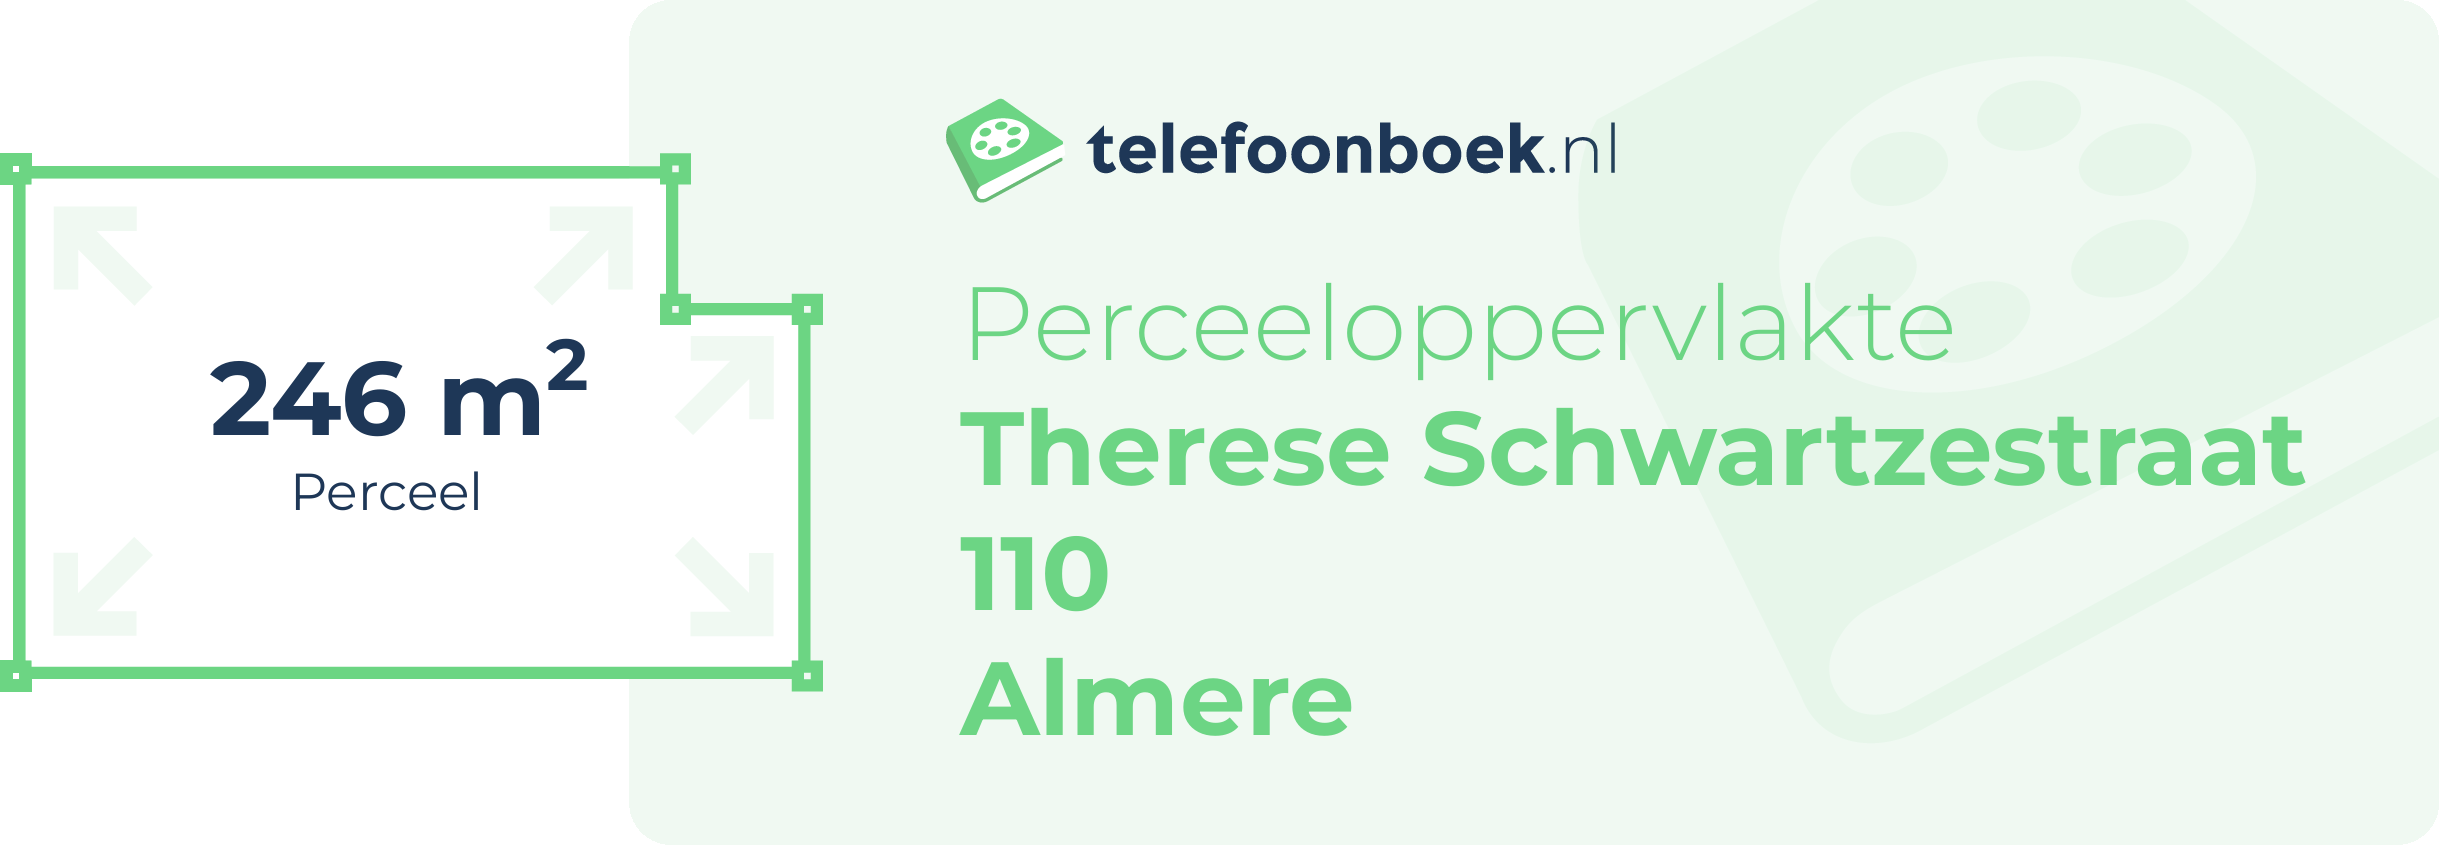 Perceeloppervlakte Therese Schwartzestraat 110 Almere